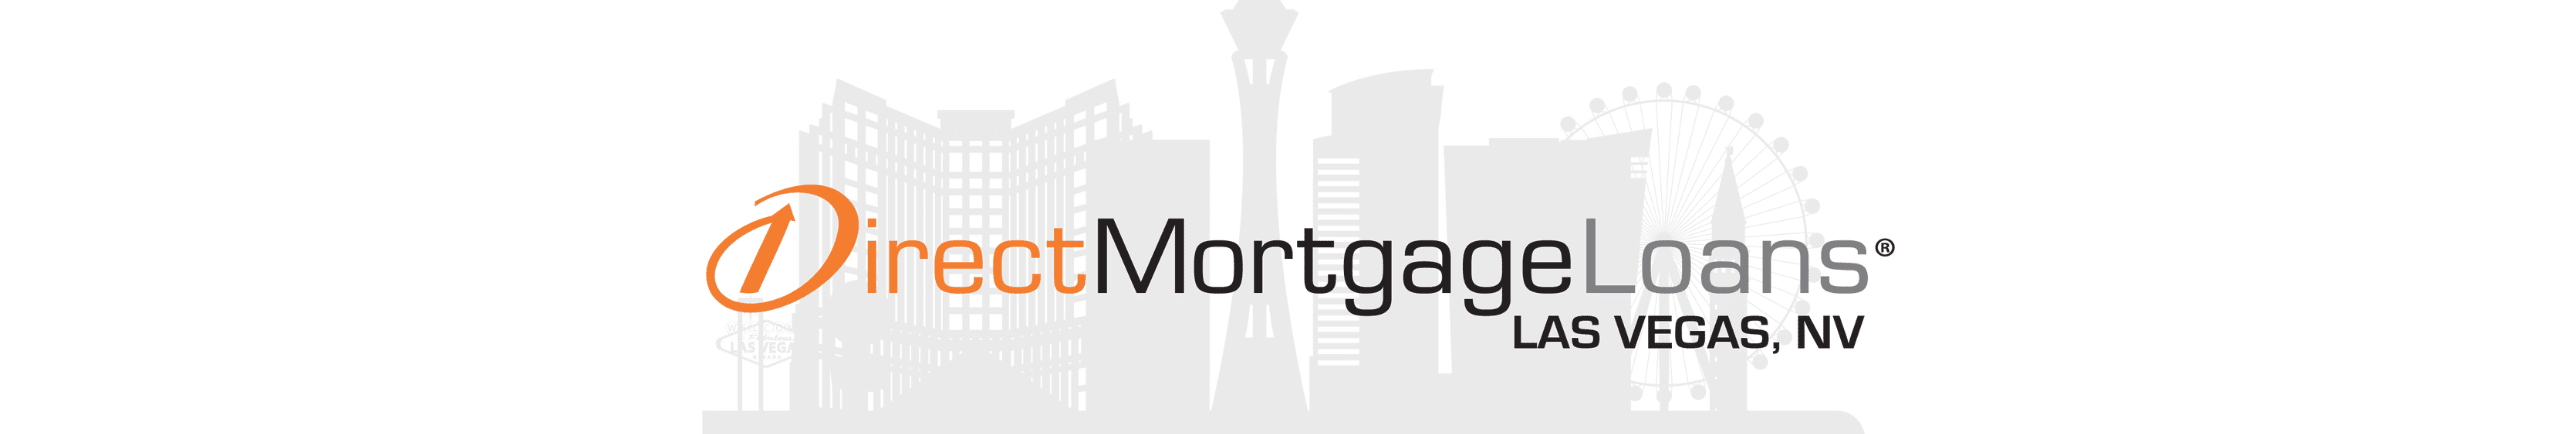 Direct Mortgage Loans: Las Vegas Logo